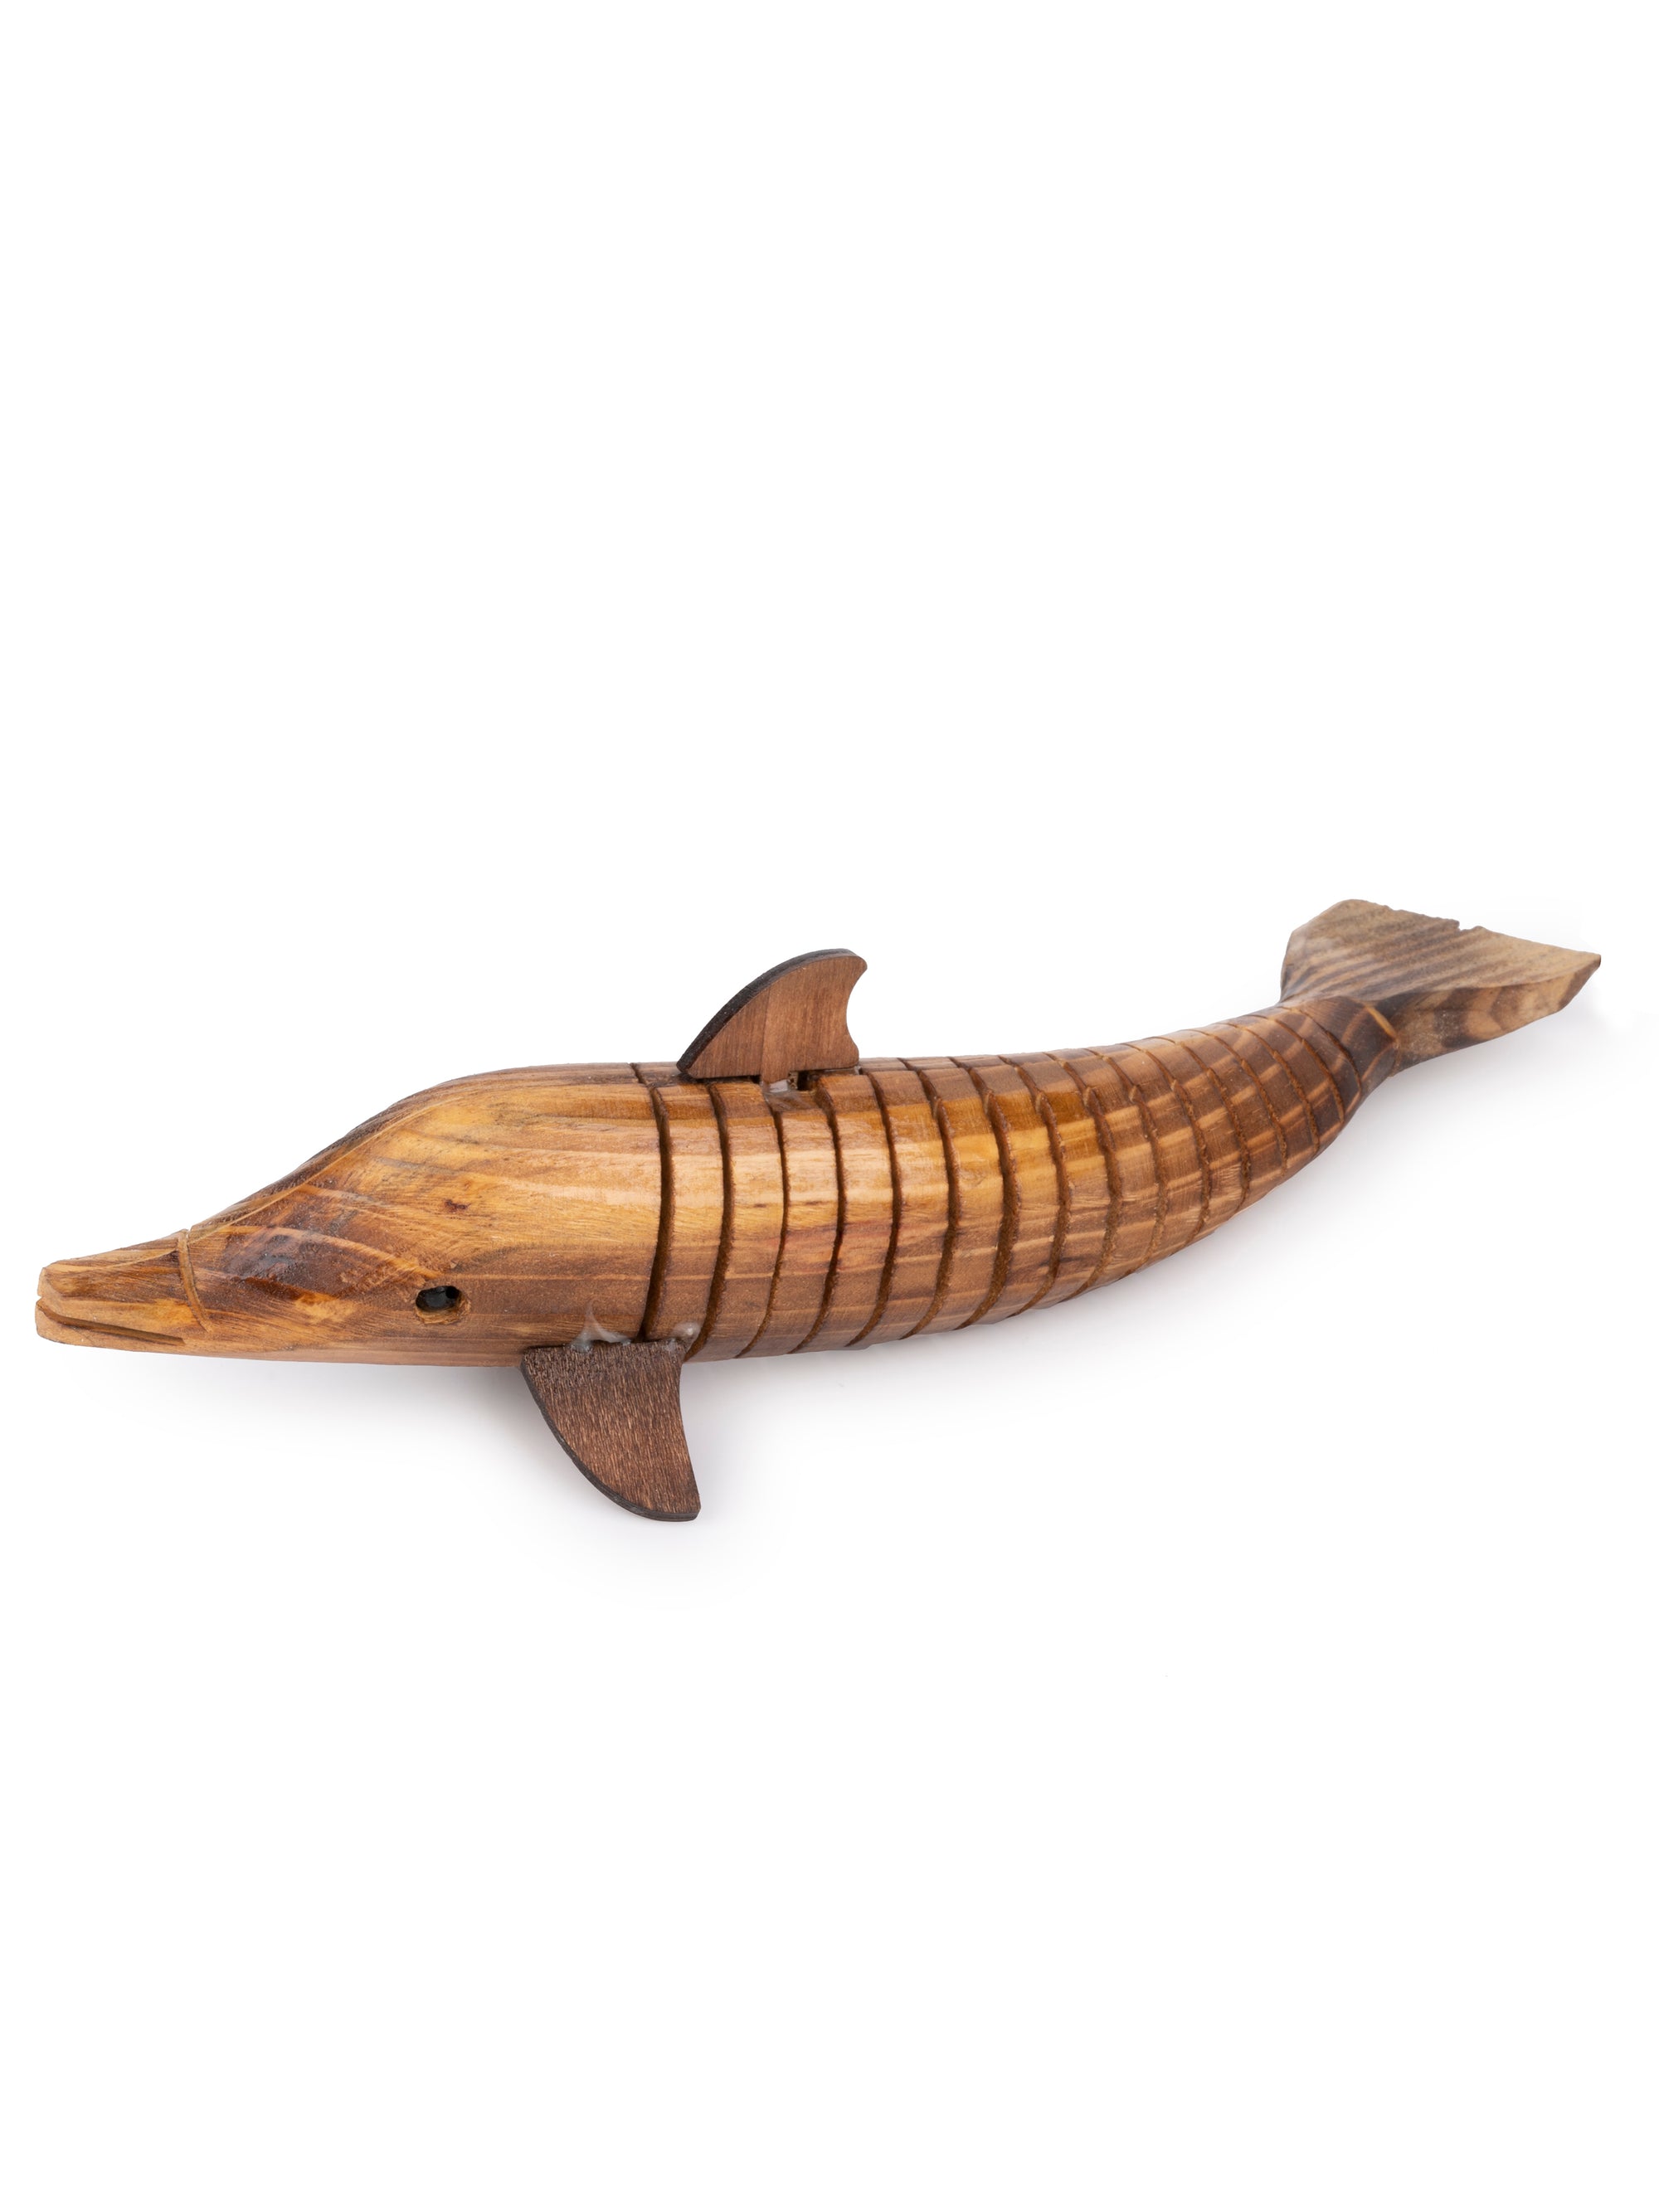 Shantiniketan Art - Wooden Dolphin Decorative Showpiece / Toy - The Heritage Artifacts